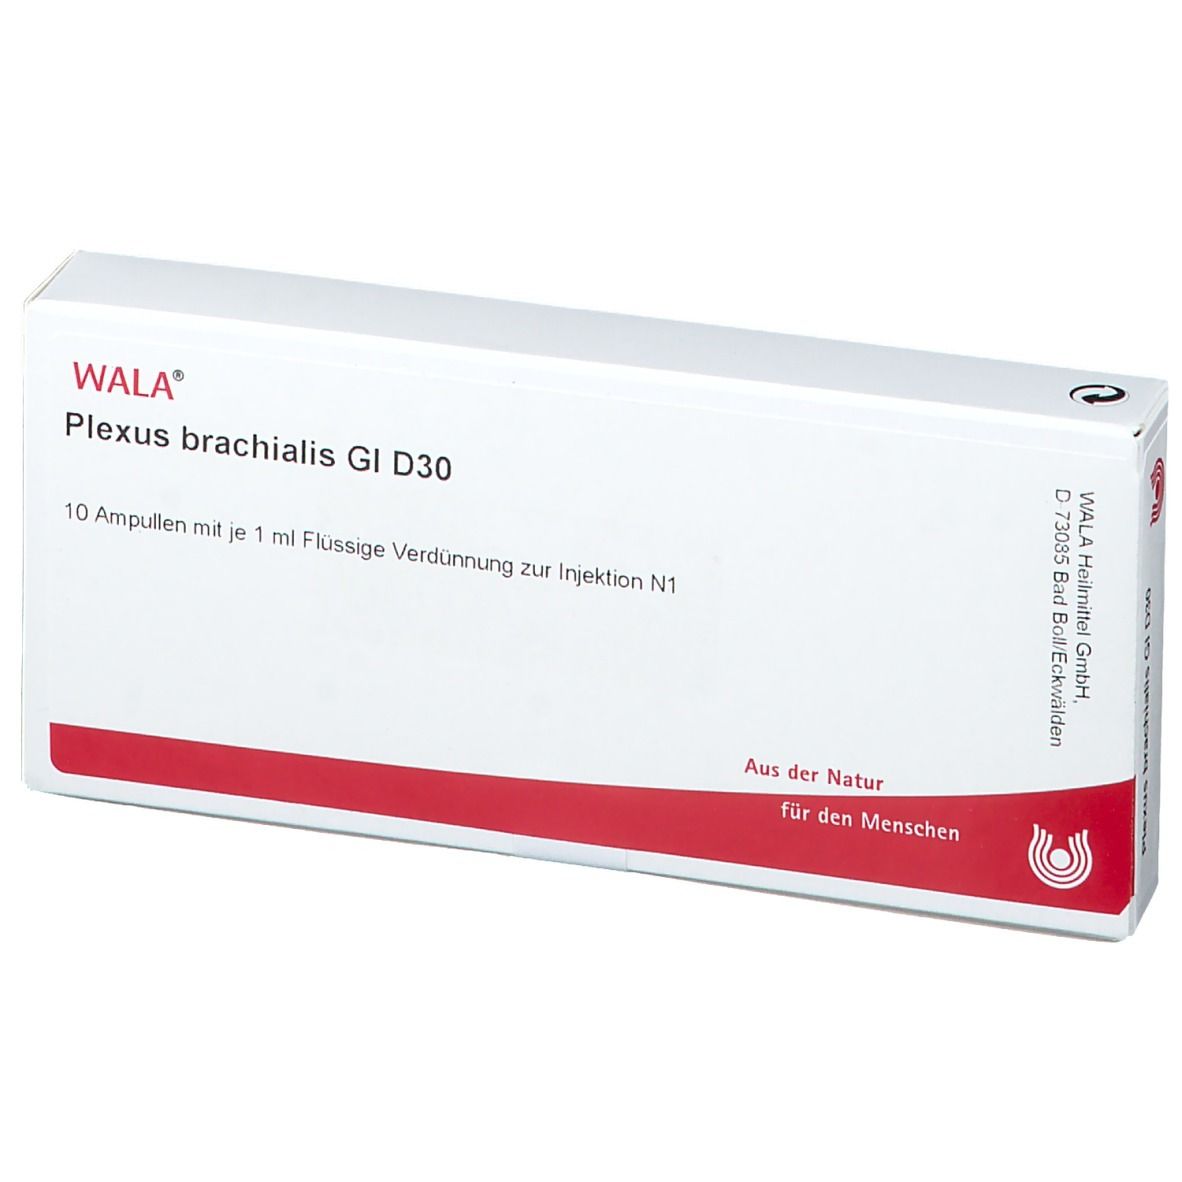 WALA® Plexus brachialis Gl D 30